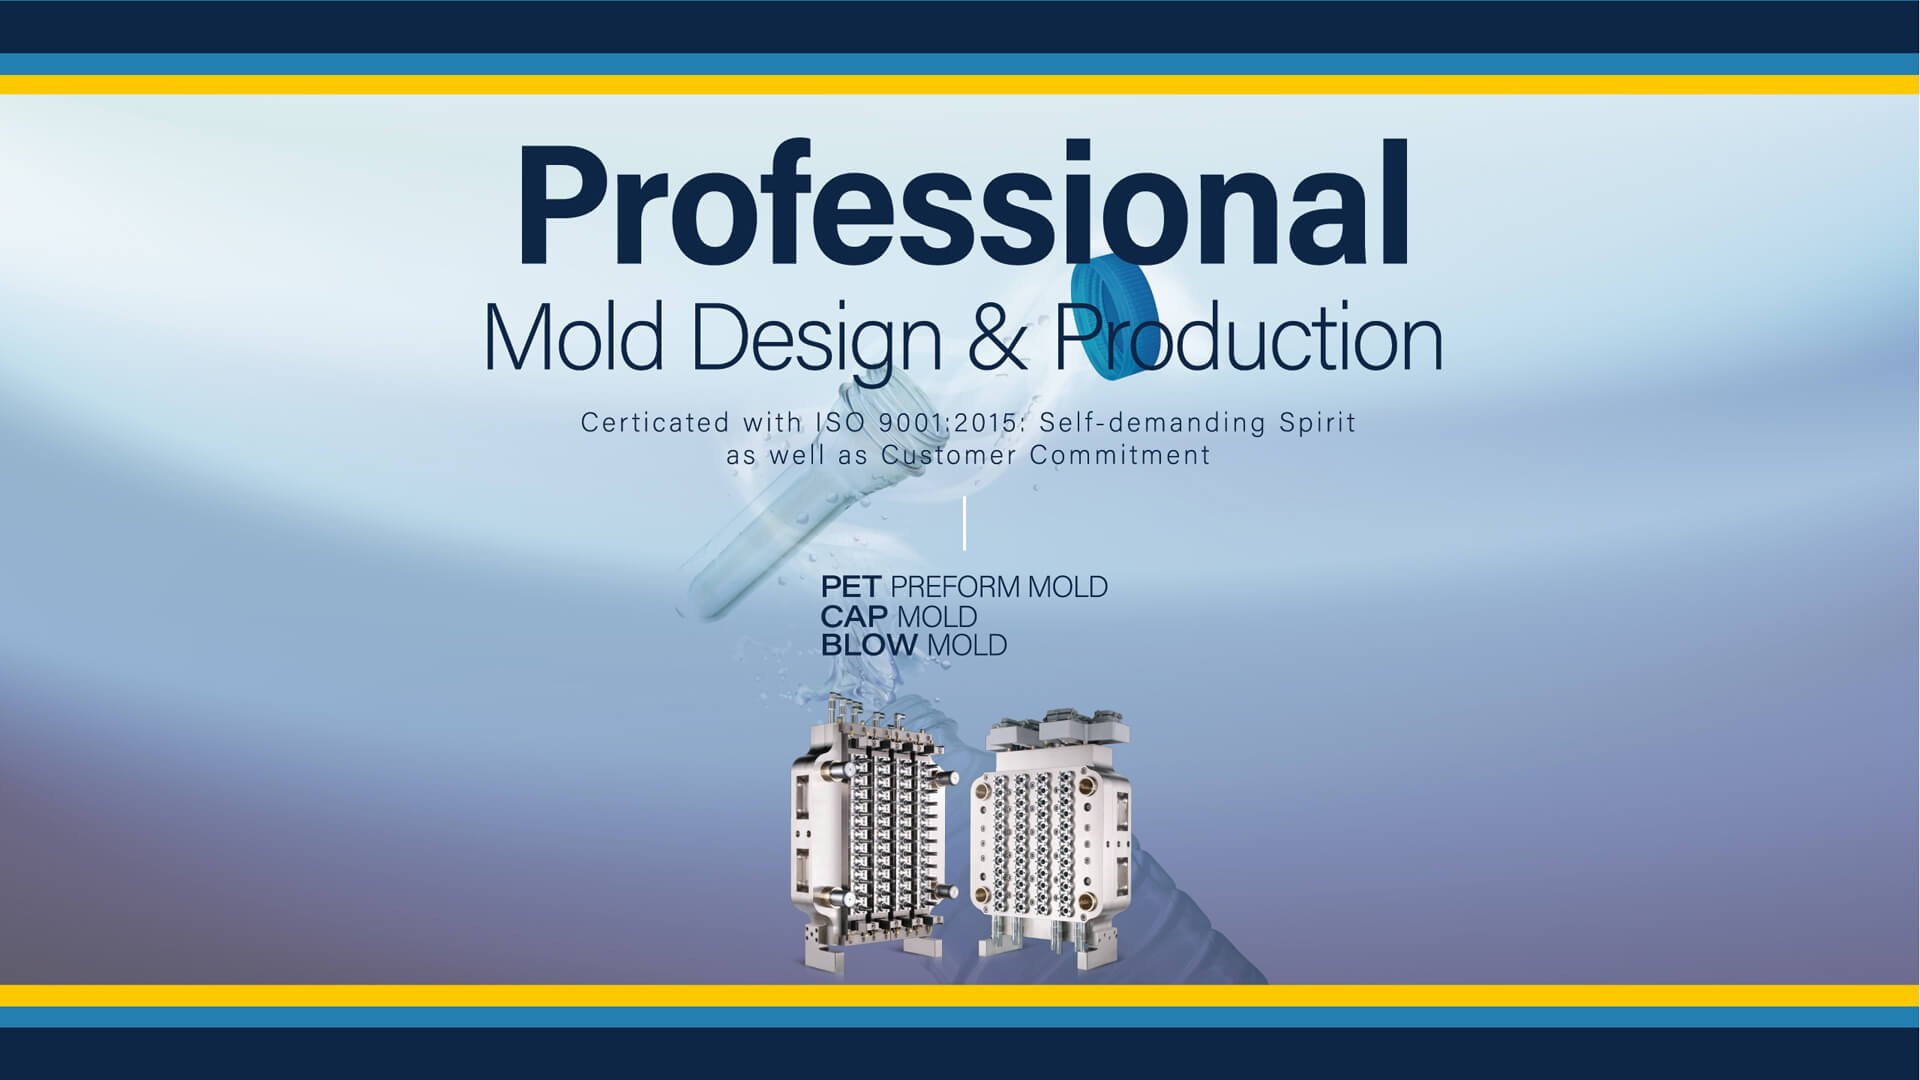 Professional Mold Design & Production